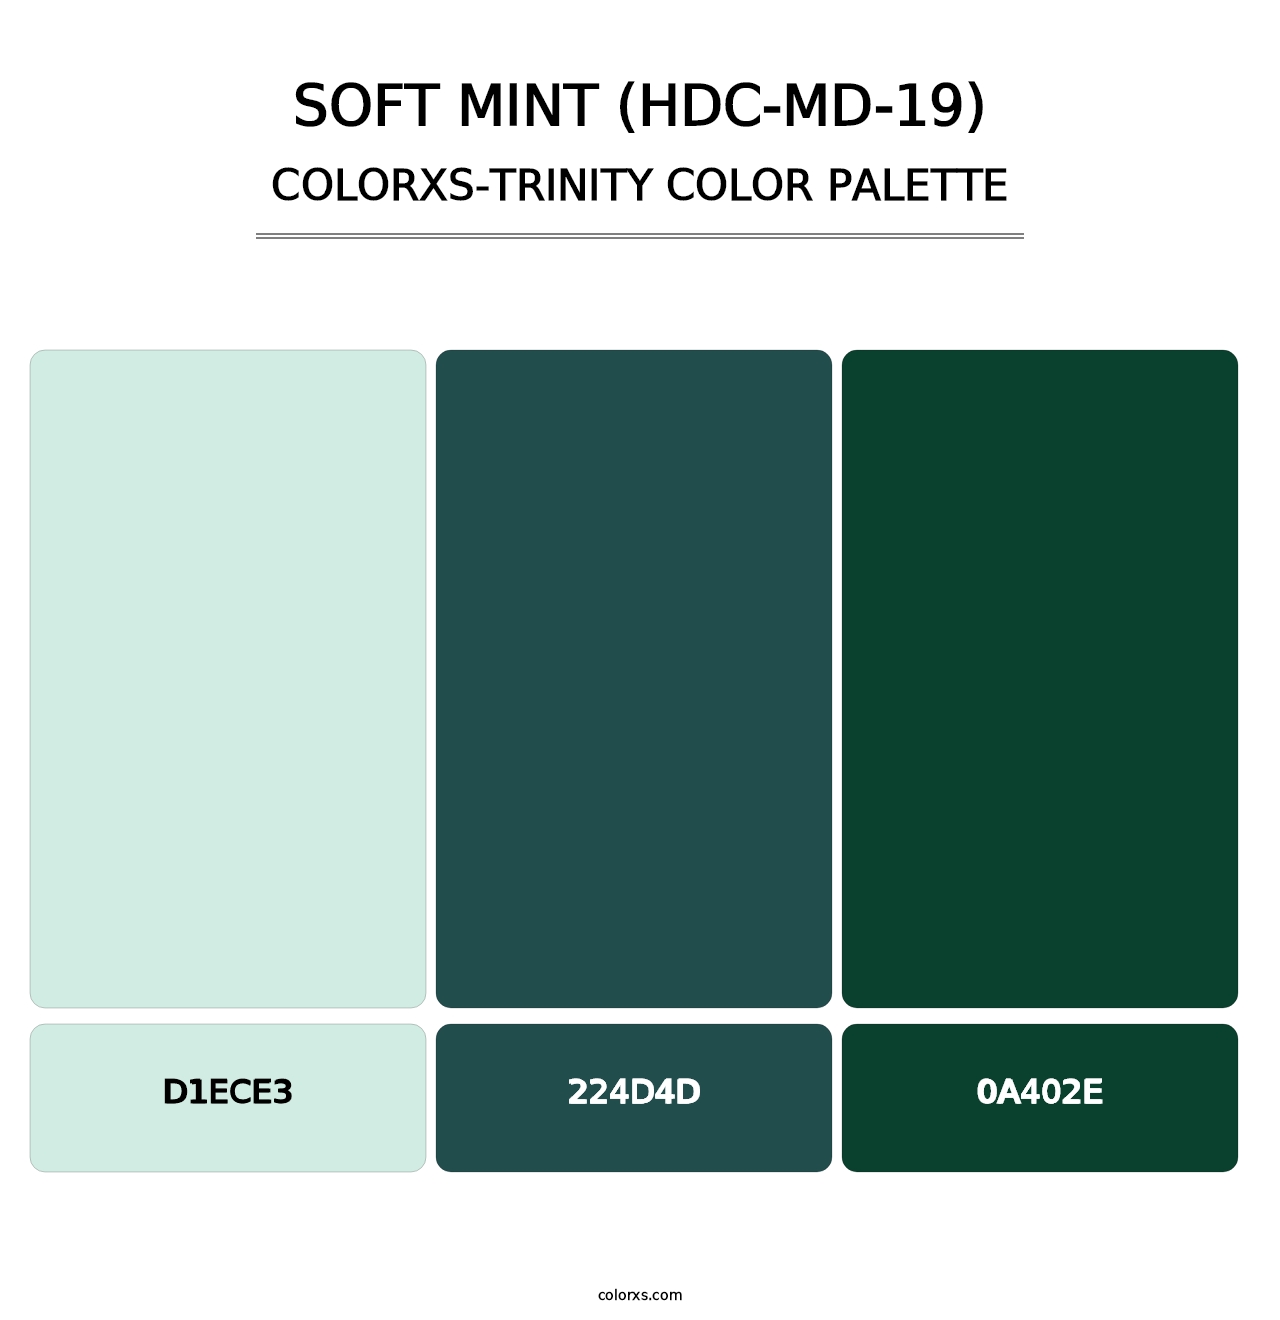 Soft Mint (HDC-MD-19) - Colorxs Trinity Palette